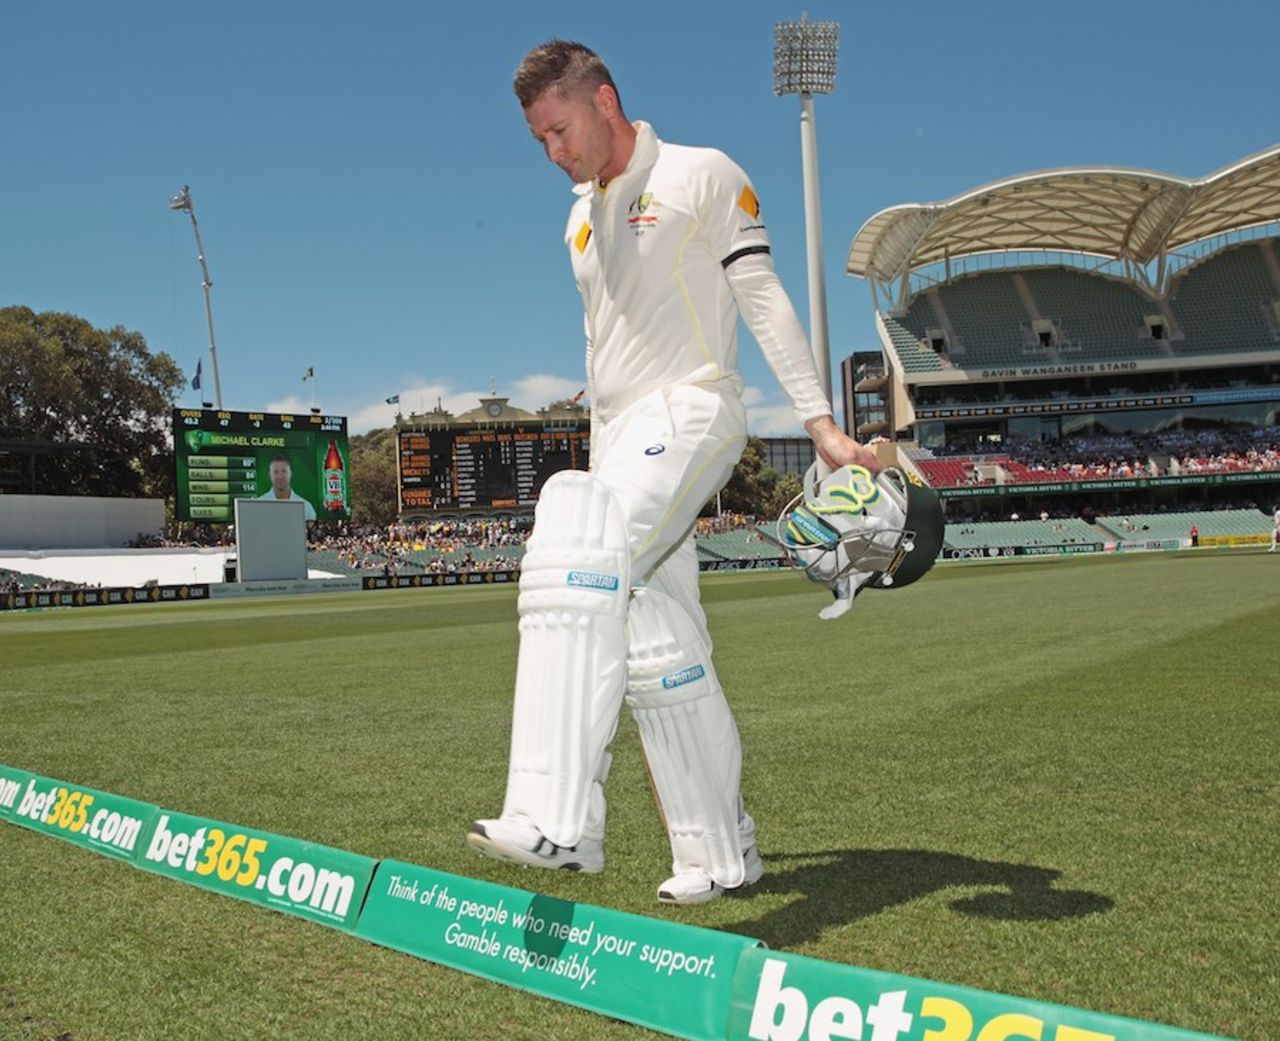 Michael Clarke retires hurt with back trouble, Australia v India, 1st Test, Adelaide, 1st day, December 9, 2014